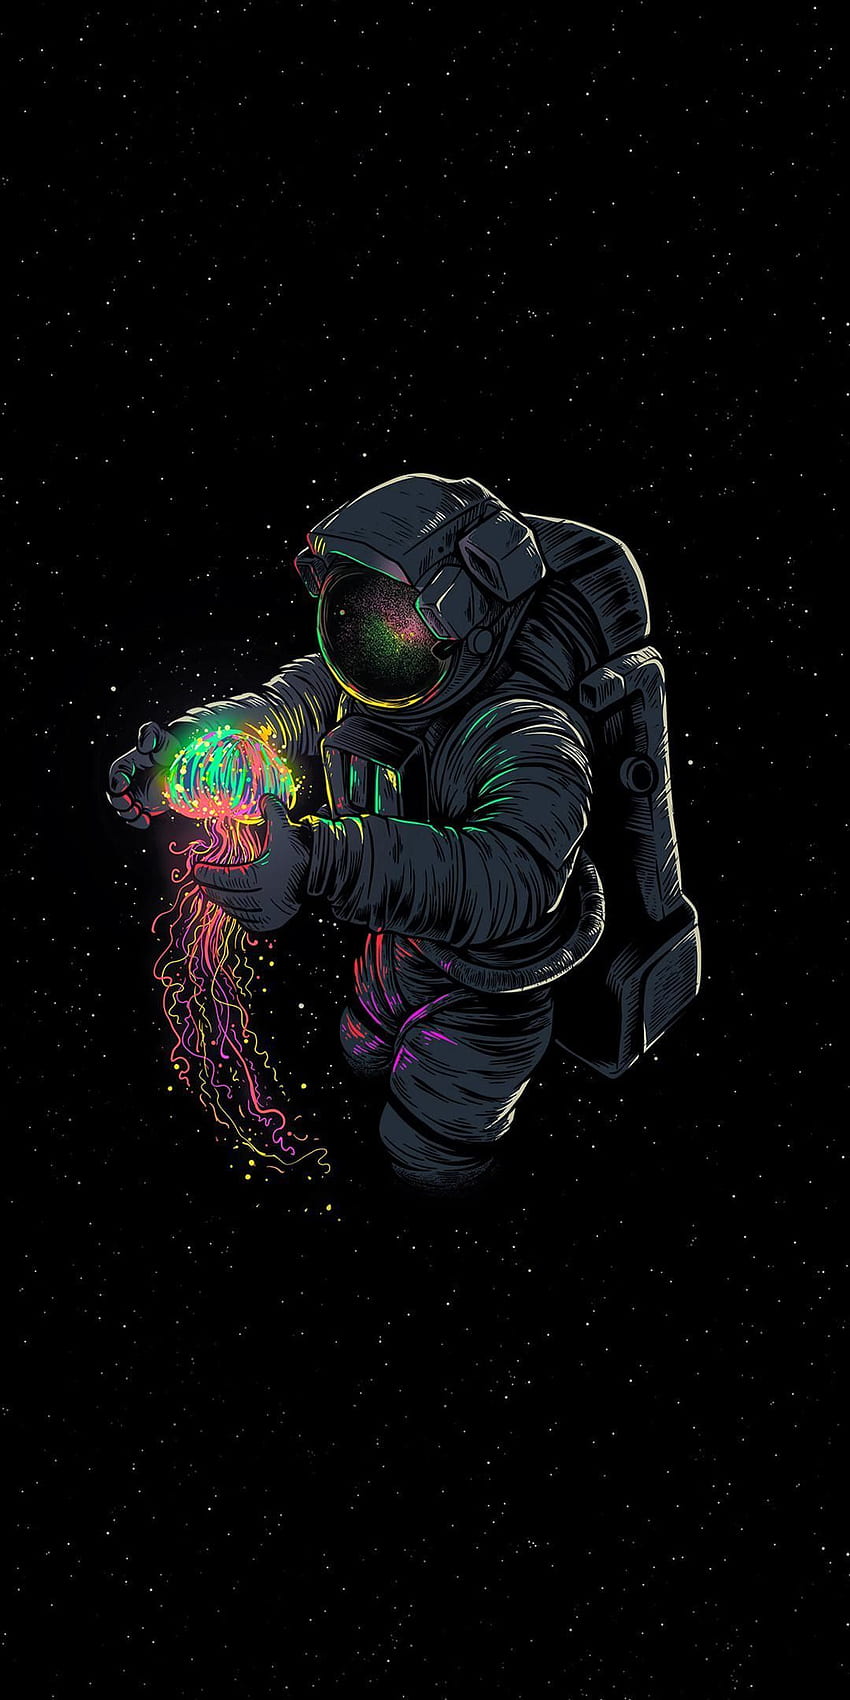 Espacio de neón en 2020. Astronauta, espacio, galaxia Samsung fondo de pantalla del teléfono